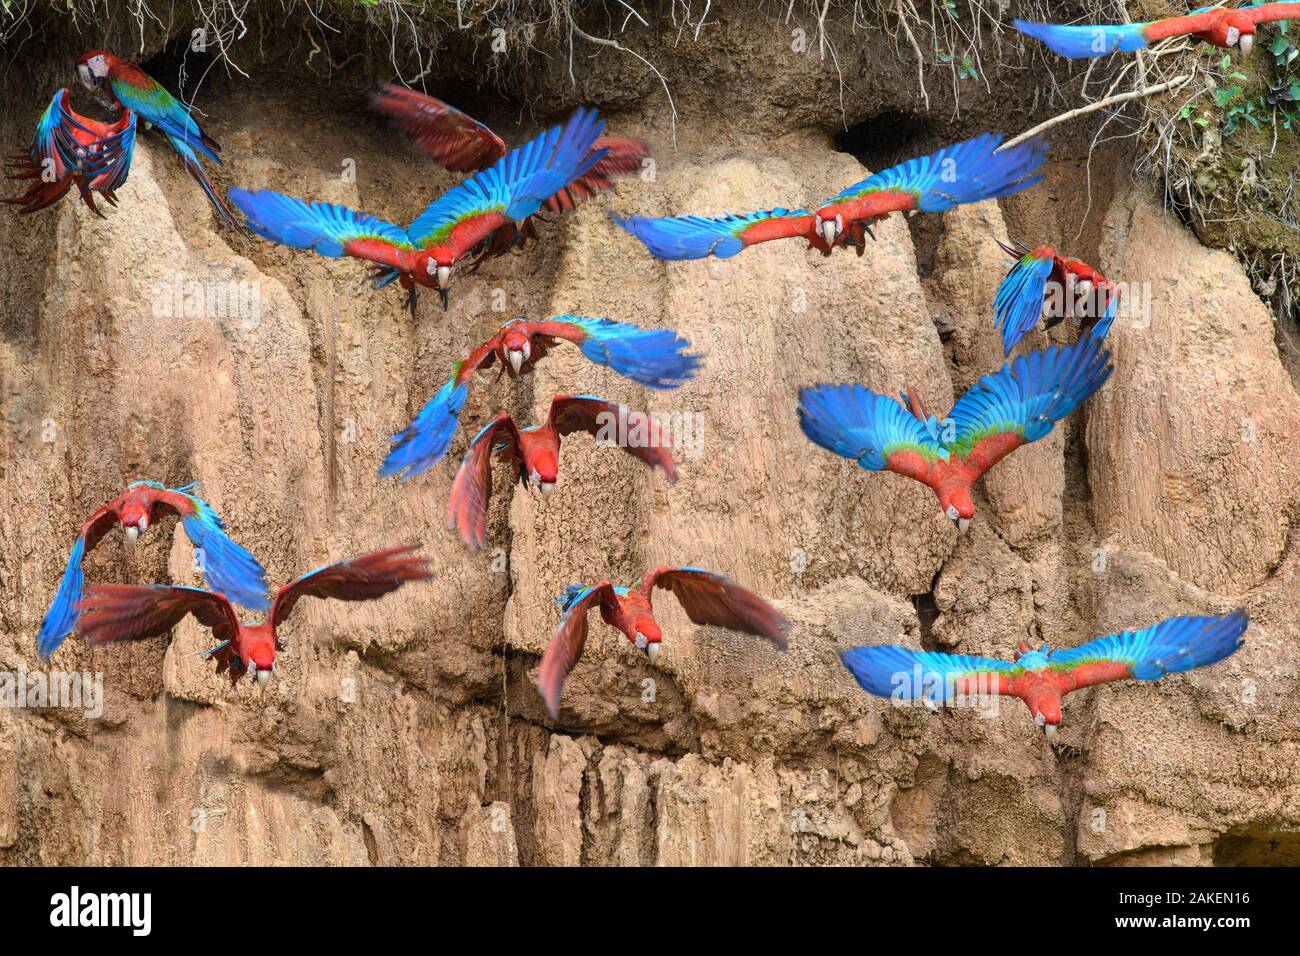 Red-and-green macaw (Ara chloropterus) flock flying in front of clay lick. Heath River, Tambopata / Bahuaja-Sonene Reserves, Amazonia, Peru / Bolivia border. Stock Photo